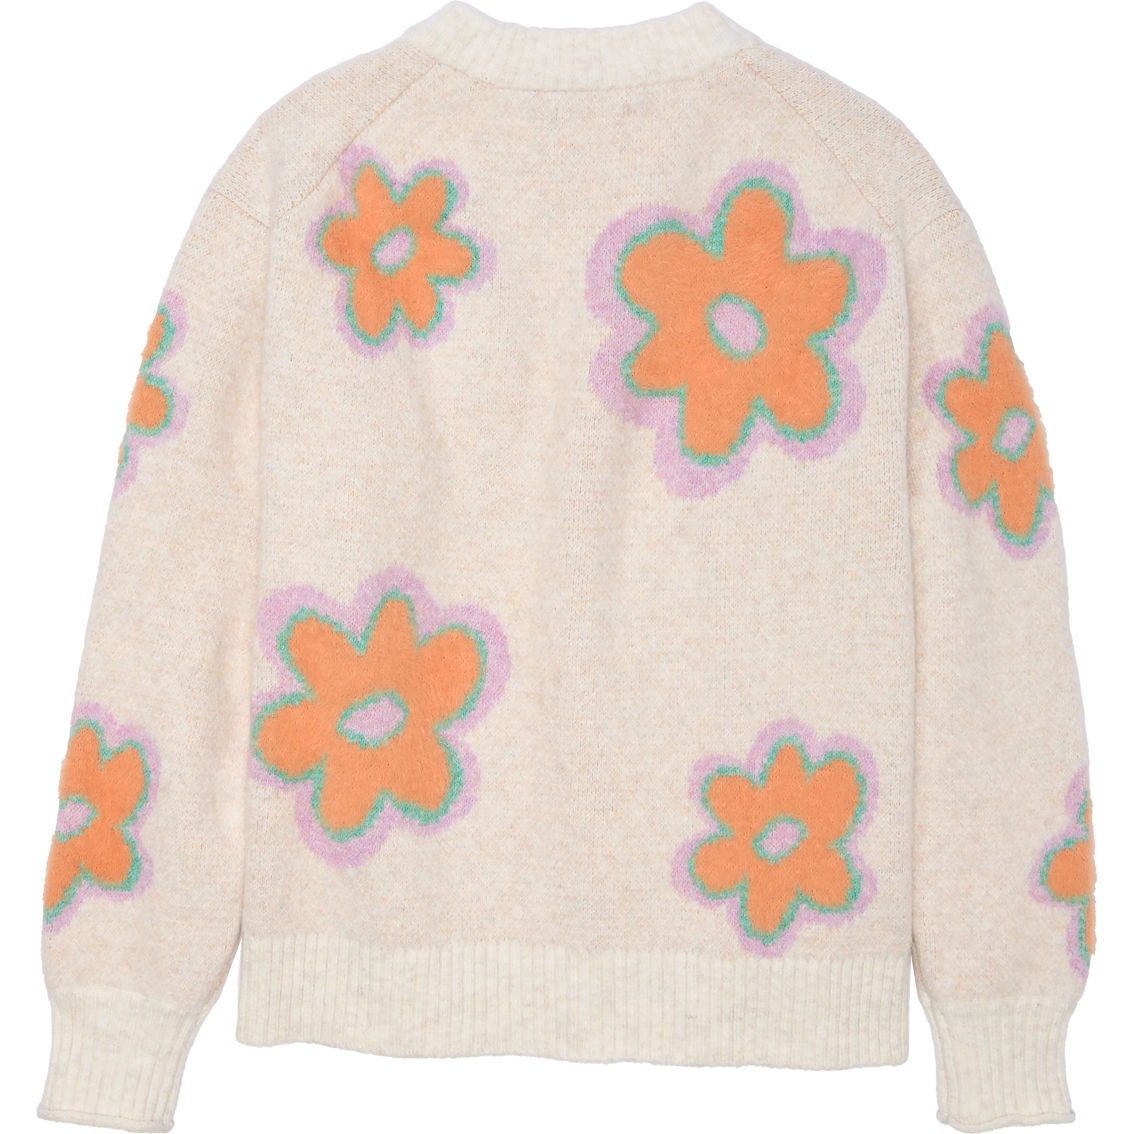 American Eagle Whoa So Soft Floral Crewneck Sweater | Sweaters ...